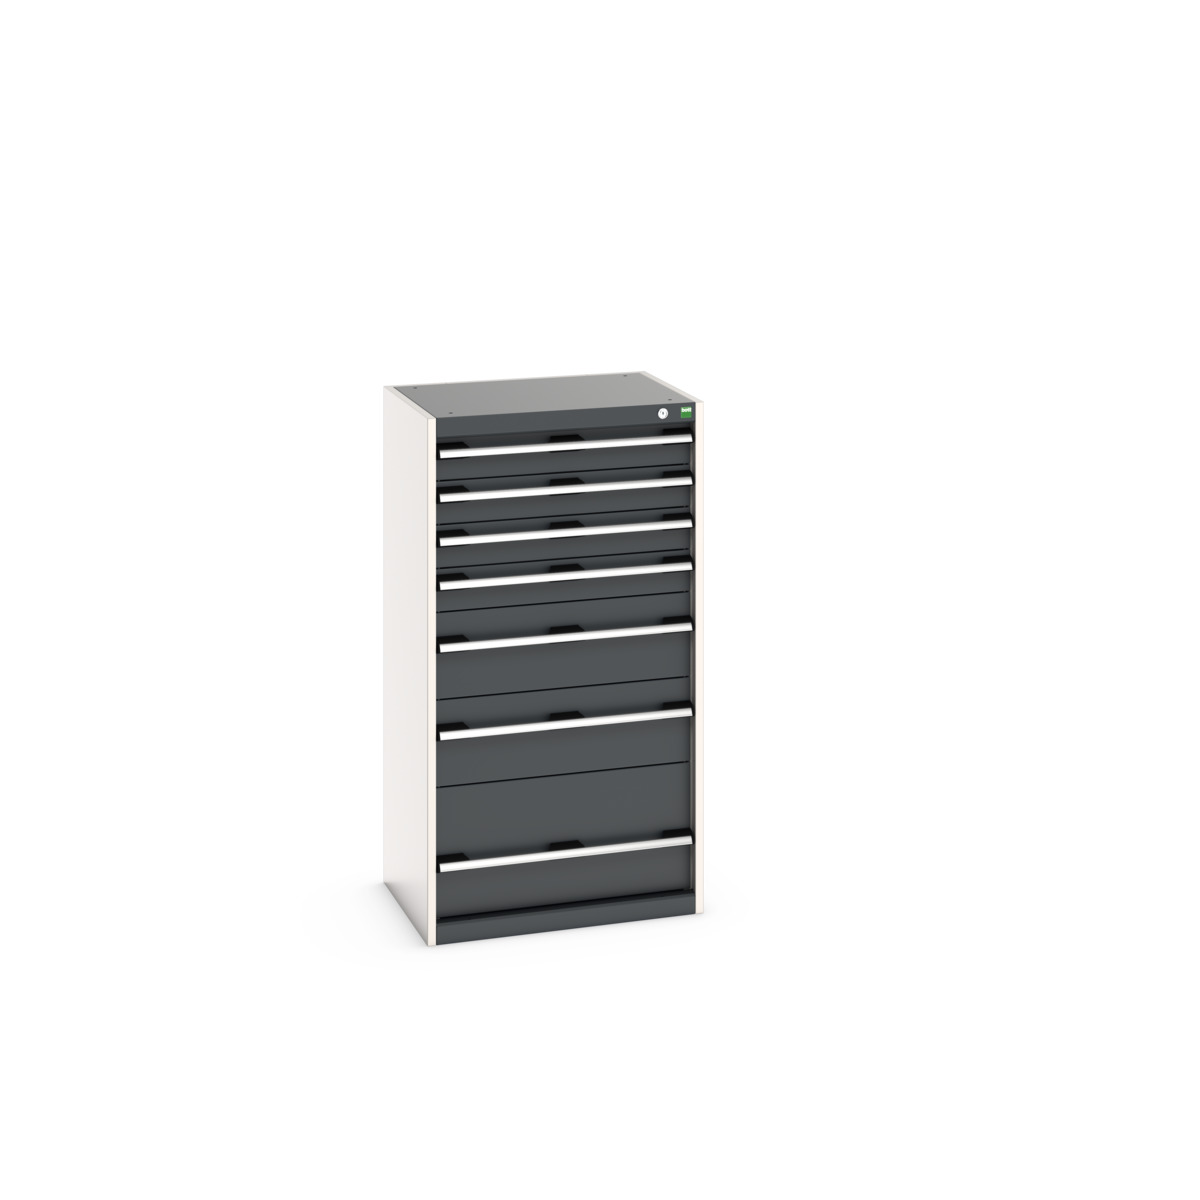 40011063. - cubio drawer cabinet